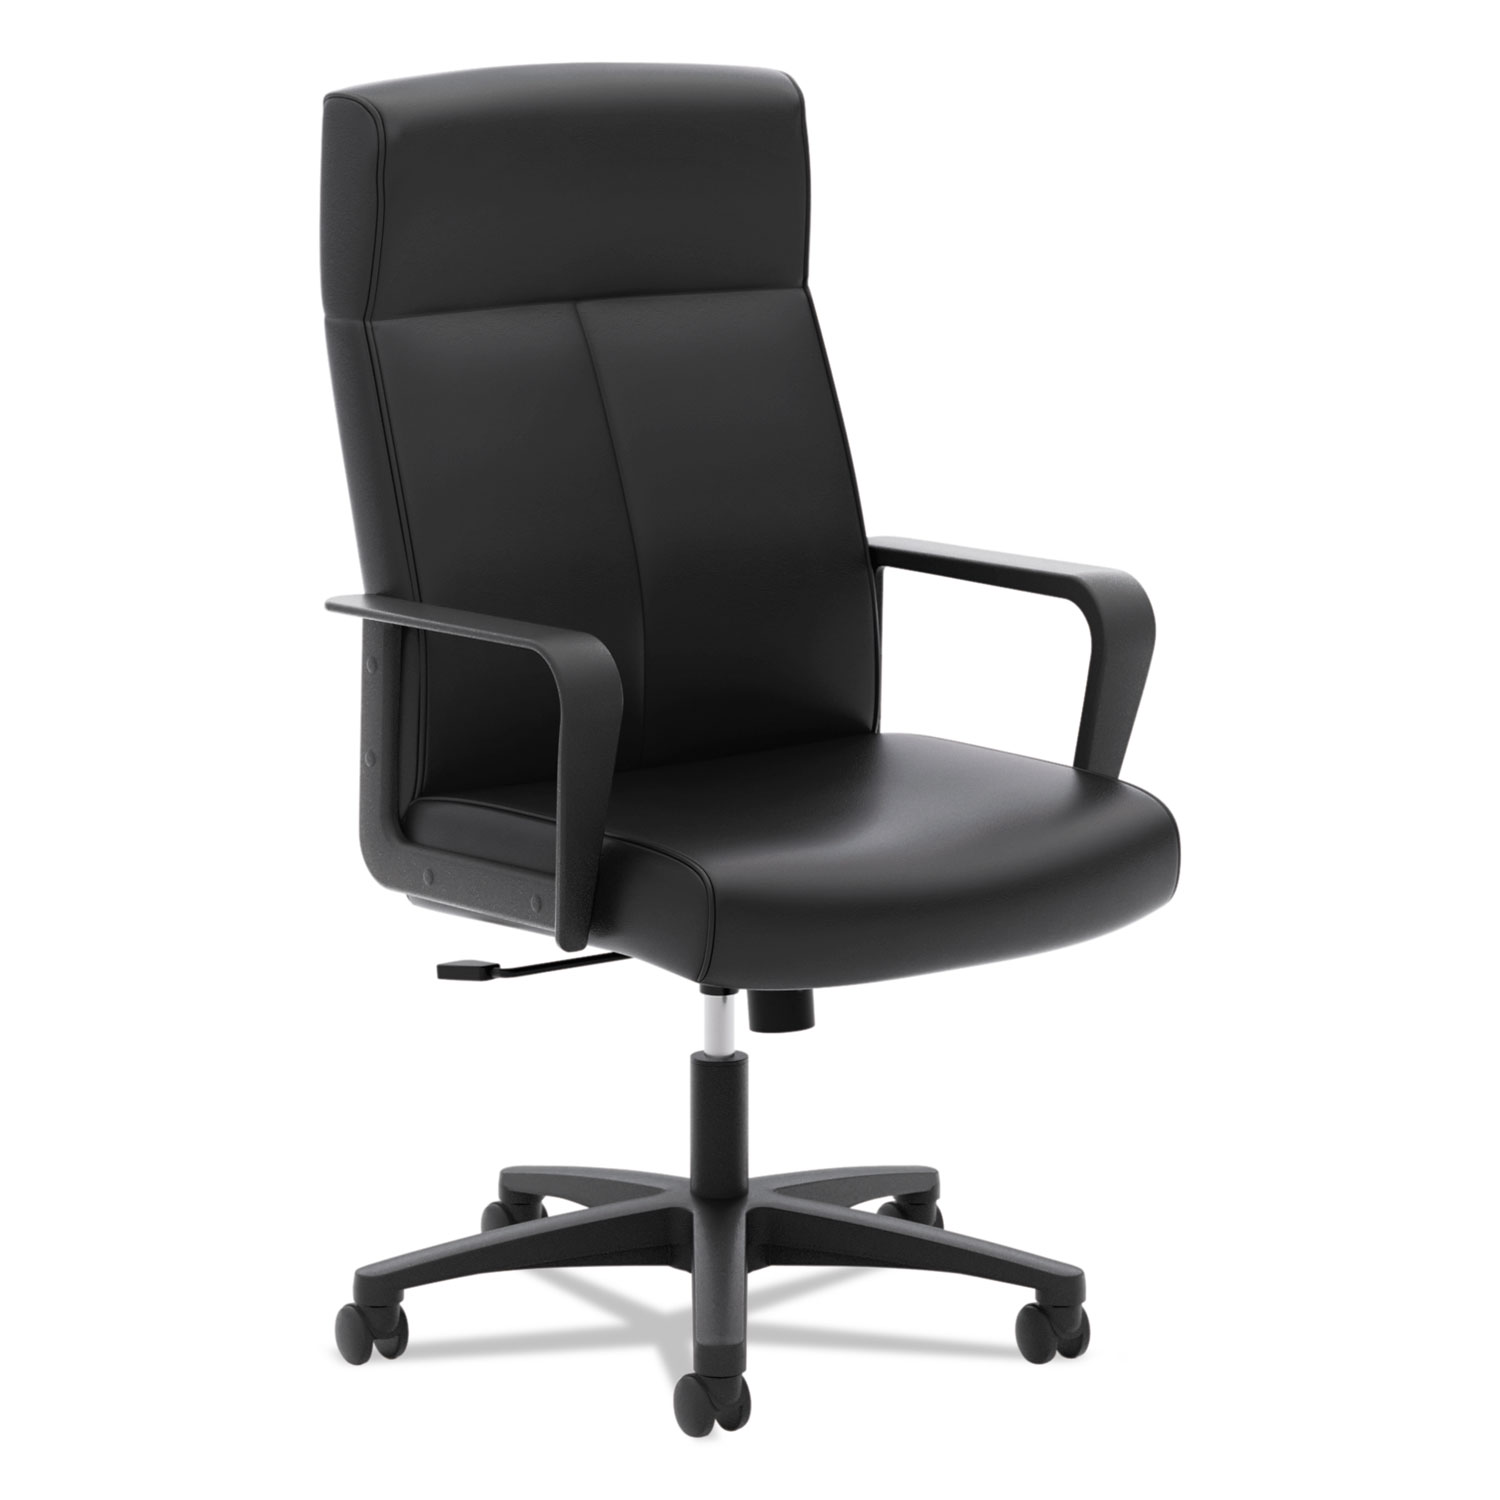  HON HVL604.SB11 HVL604 High-Back Executive Chair, Supports up to 250 lbs., Black Seat/Black Back, Black Base (BSXVL604SB11) 